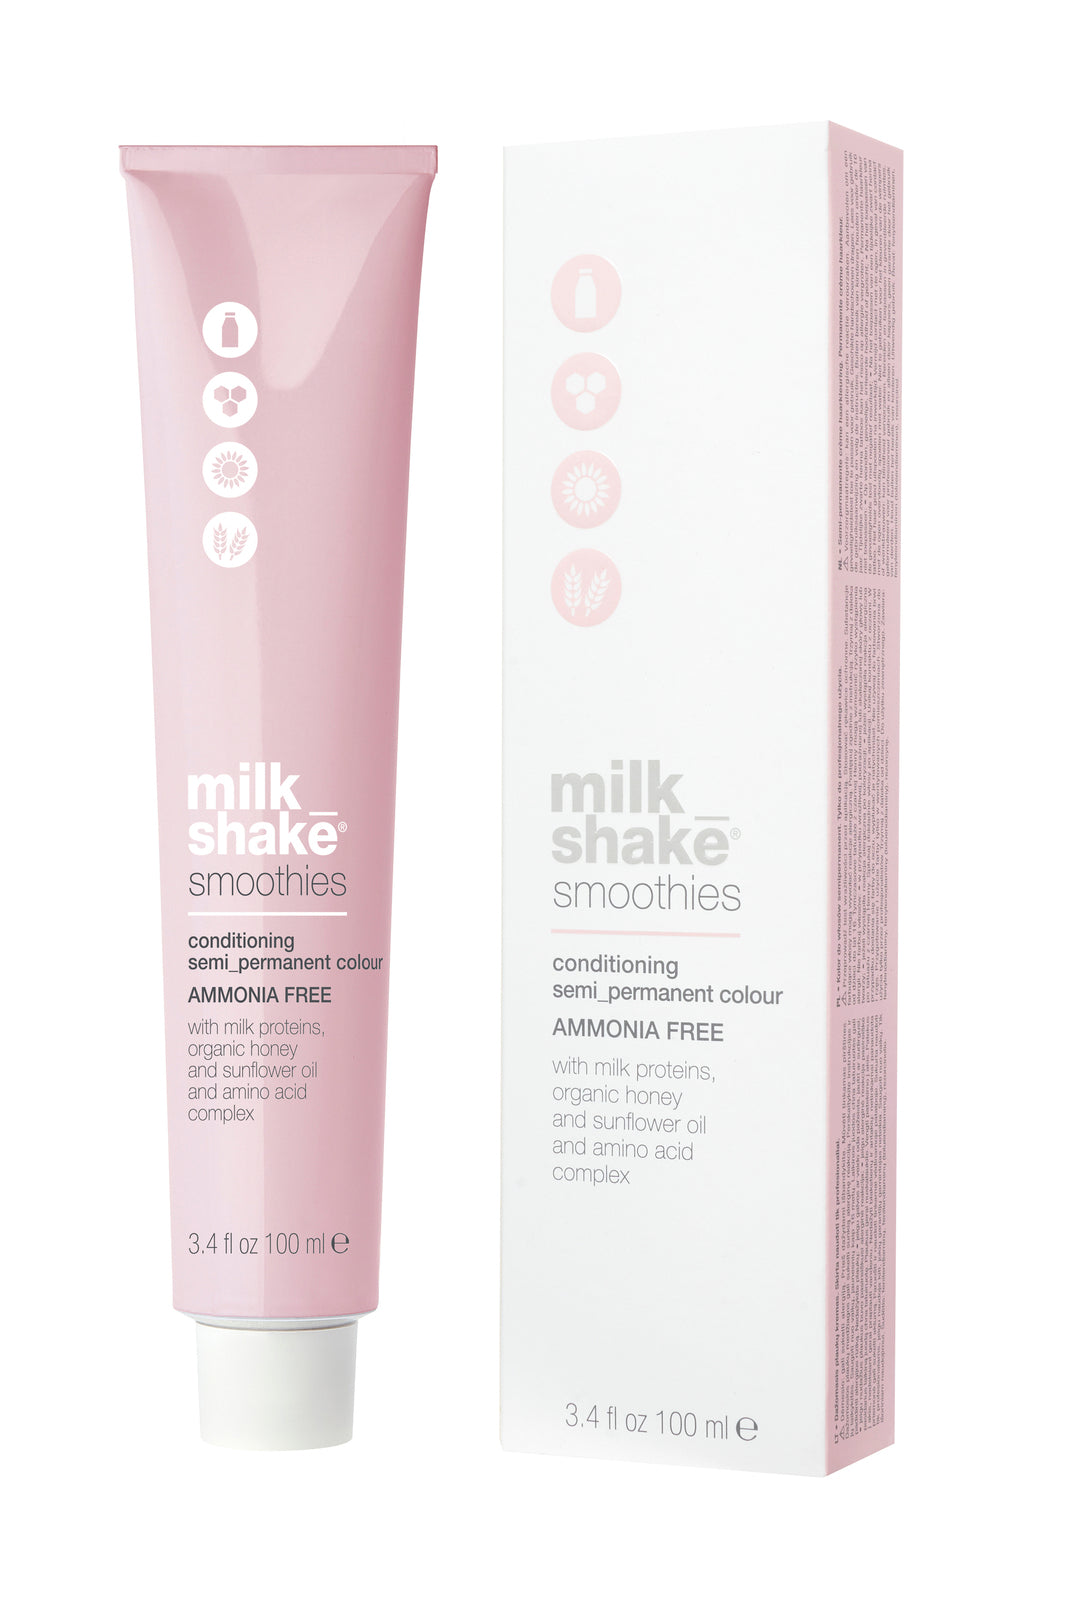 Milkshake smoothies semi-permanent color PEACH